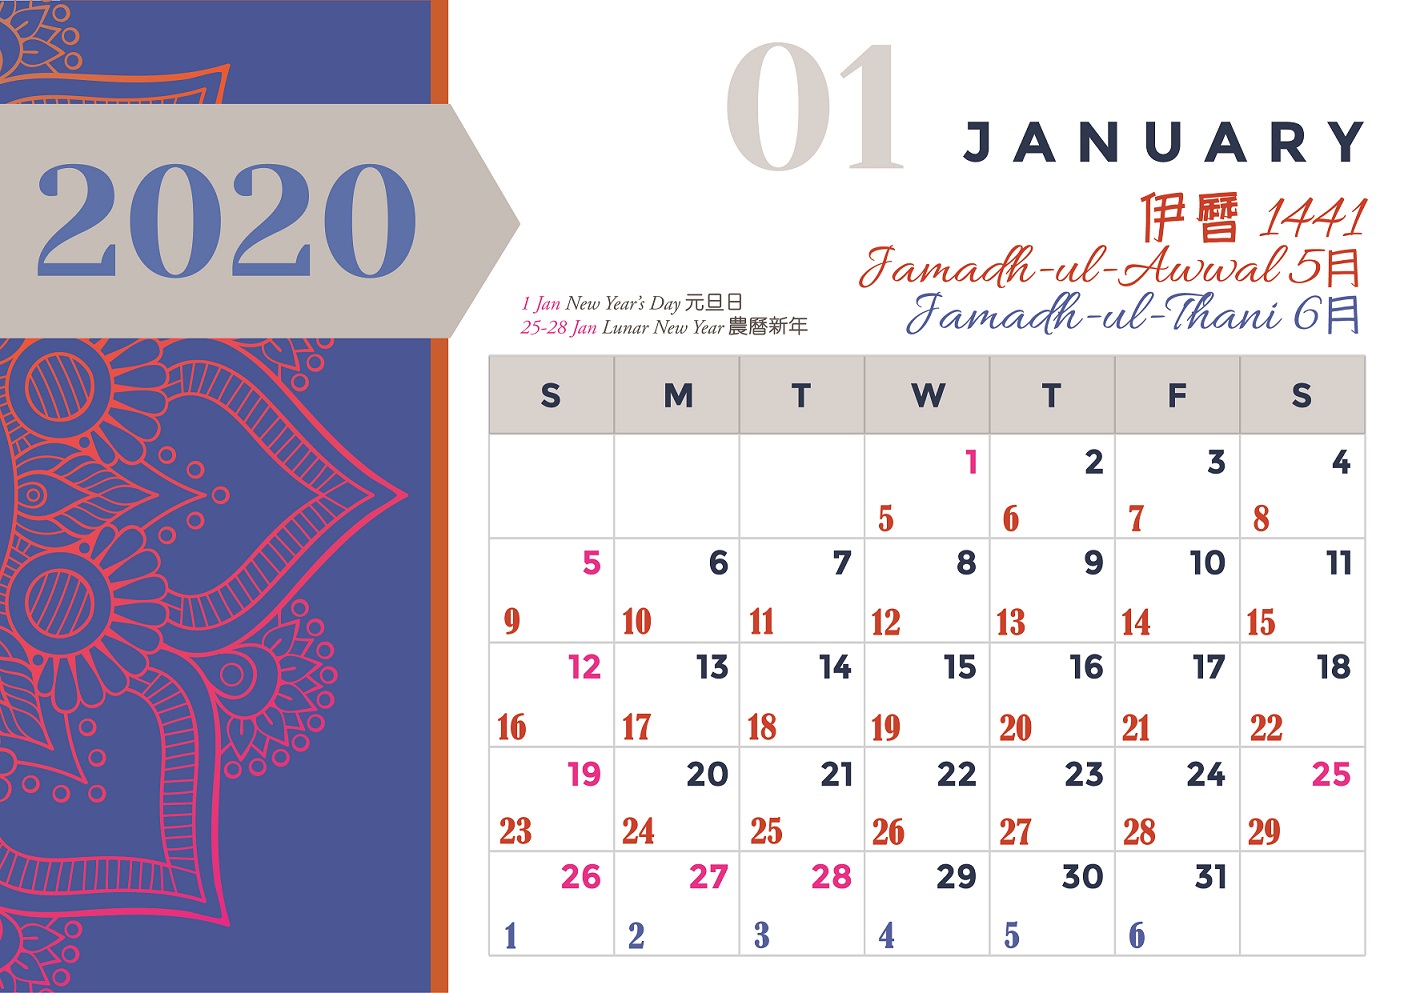 Islamic calendar 2020 usa kesilfinders